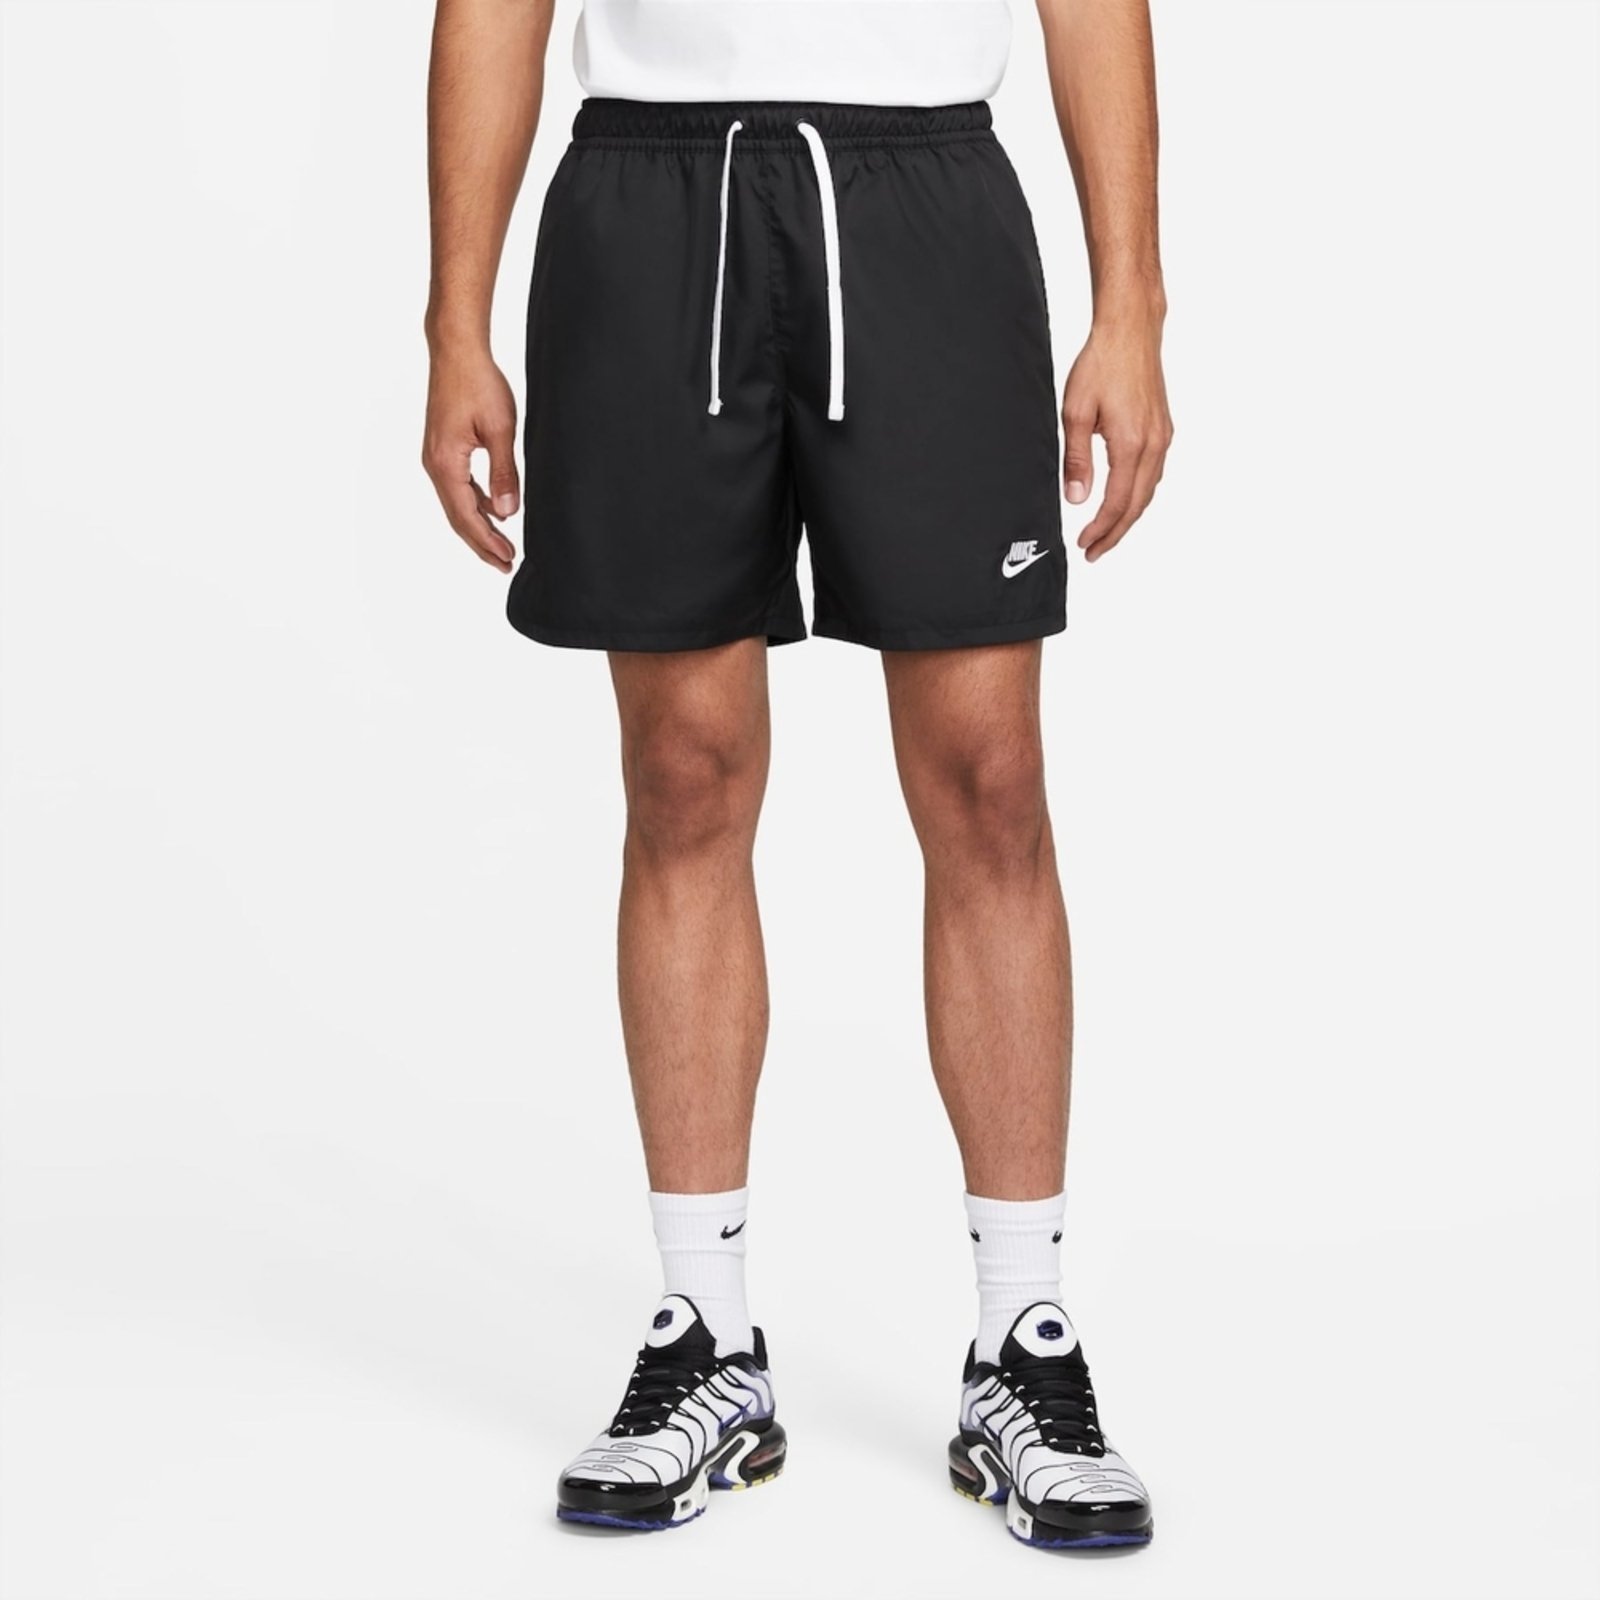 Nike Sportswear - Produtos Exclusivos - Nike - Ofertas e Preços